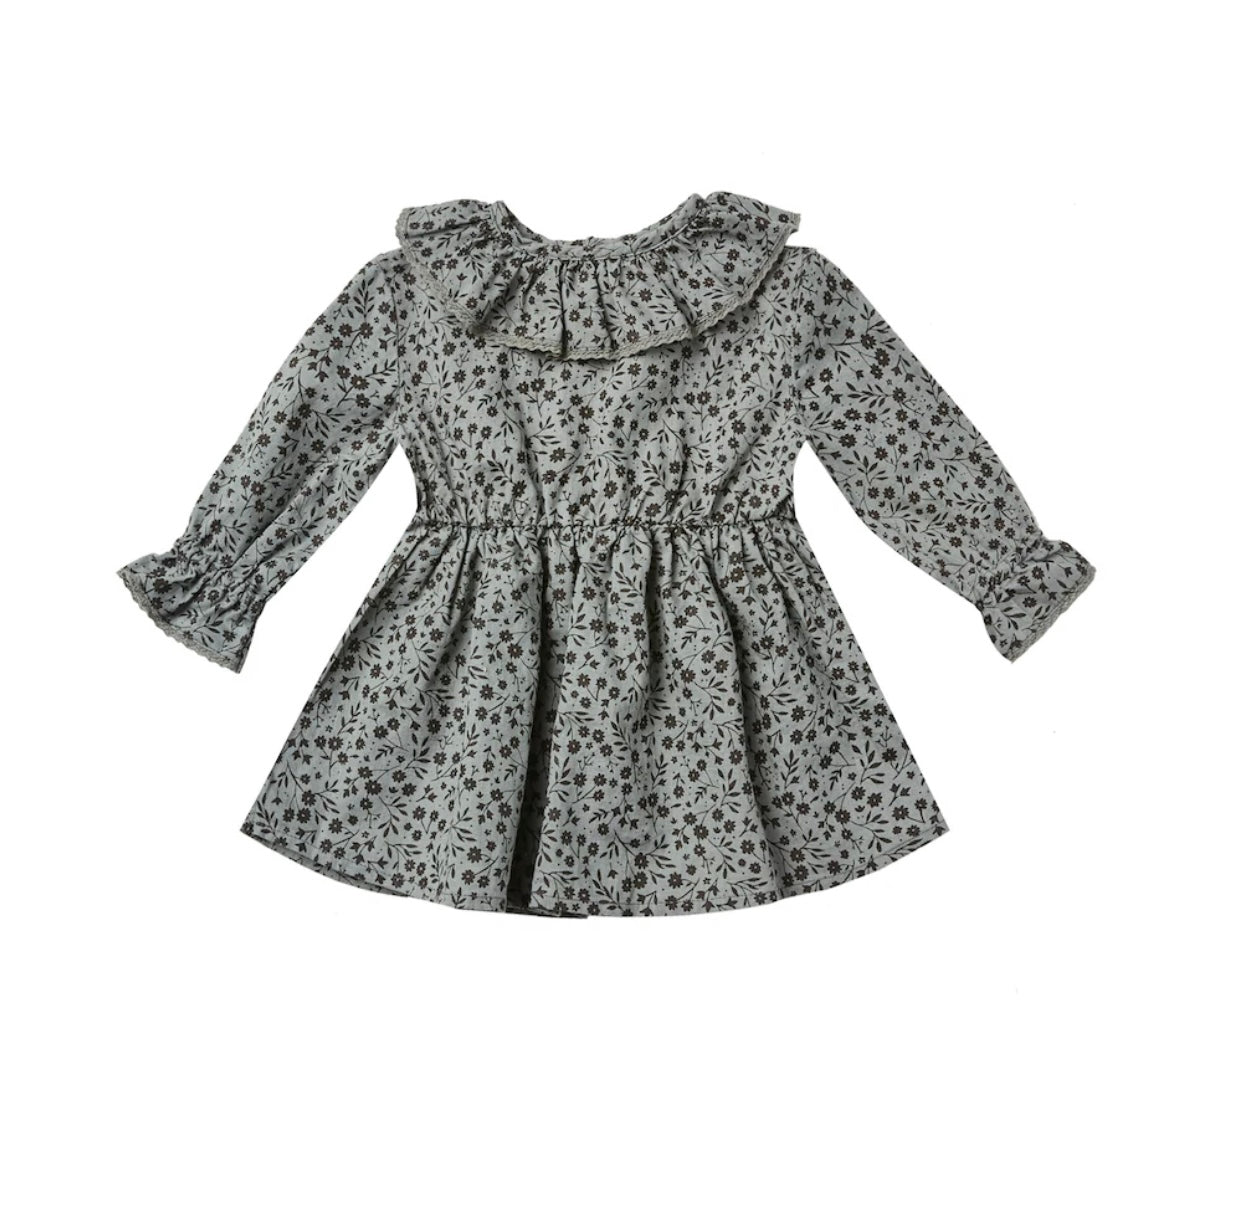 Ruffle Collar Baby Dress - Indigo Meadow